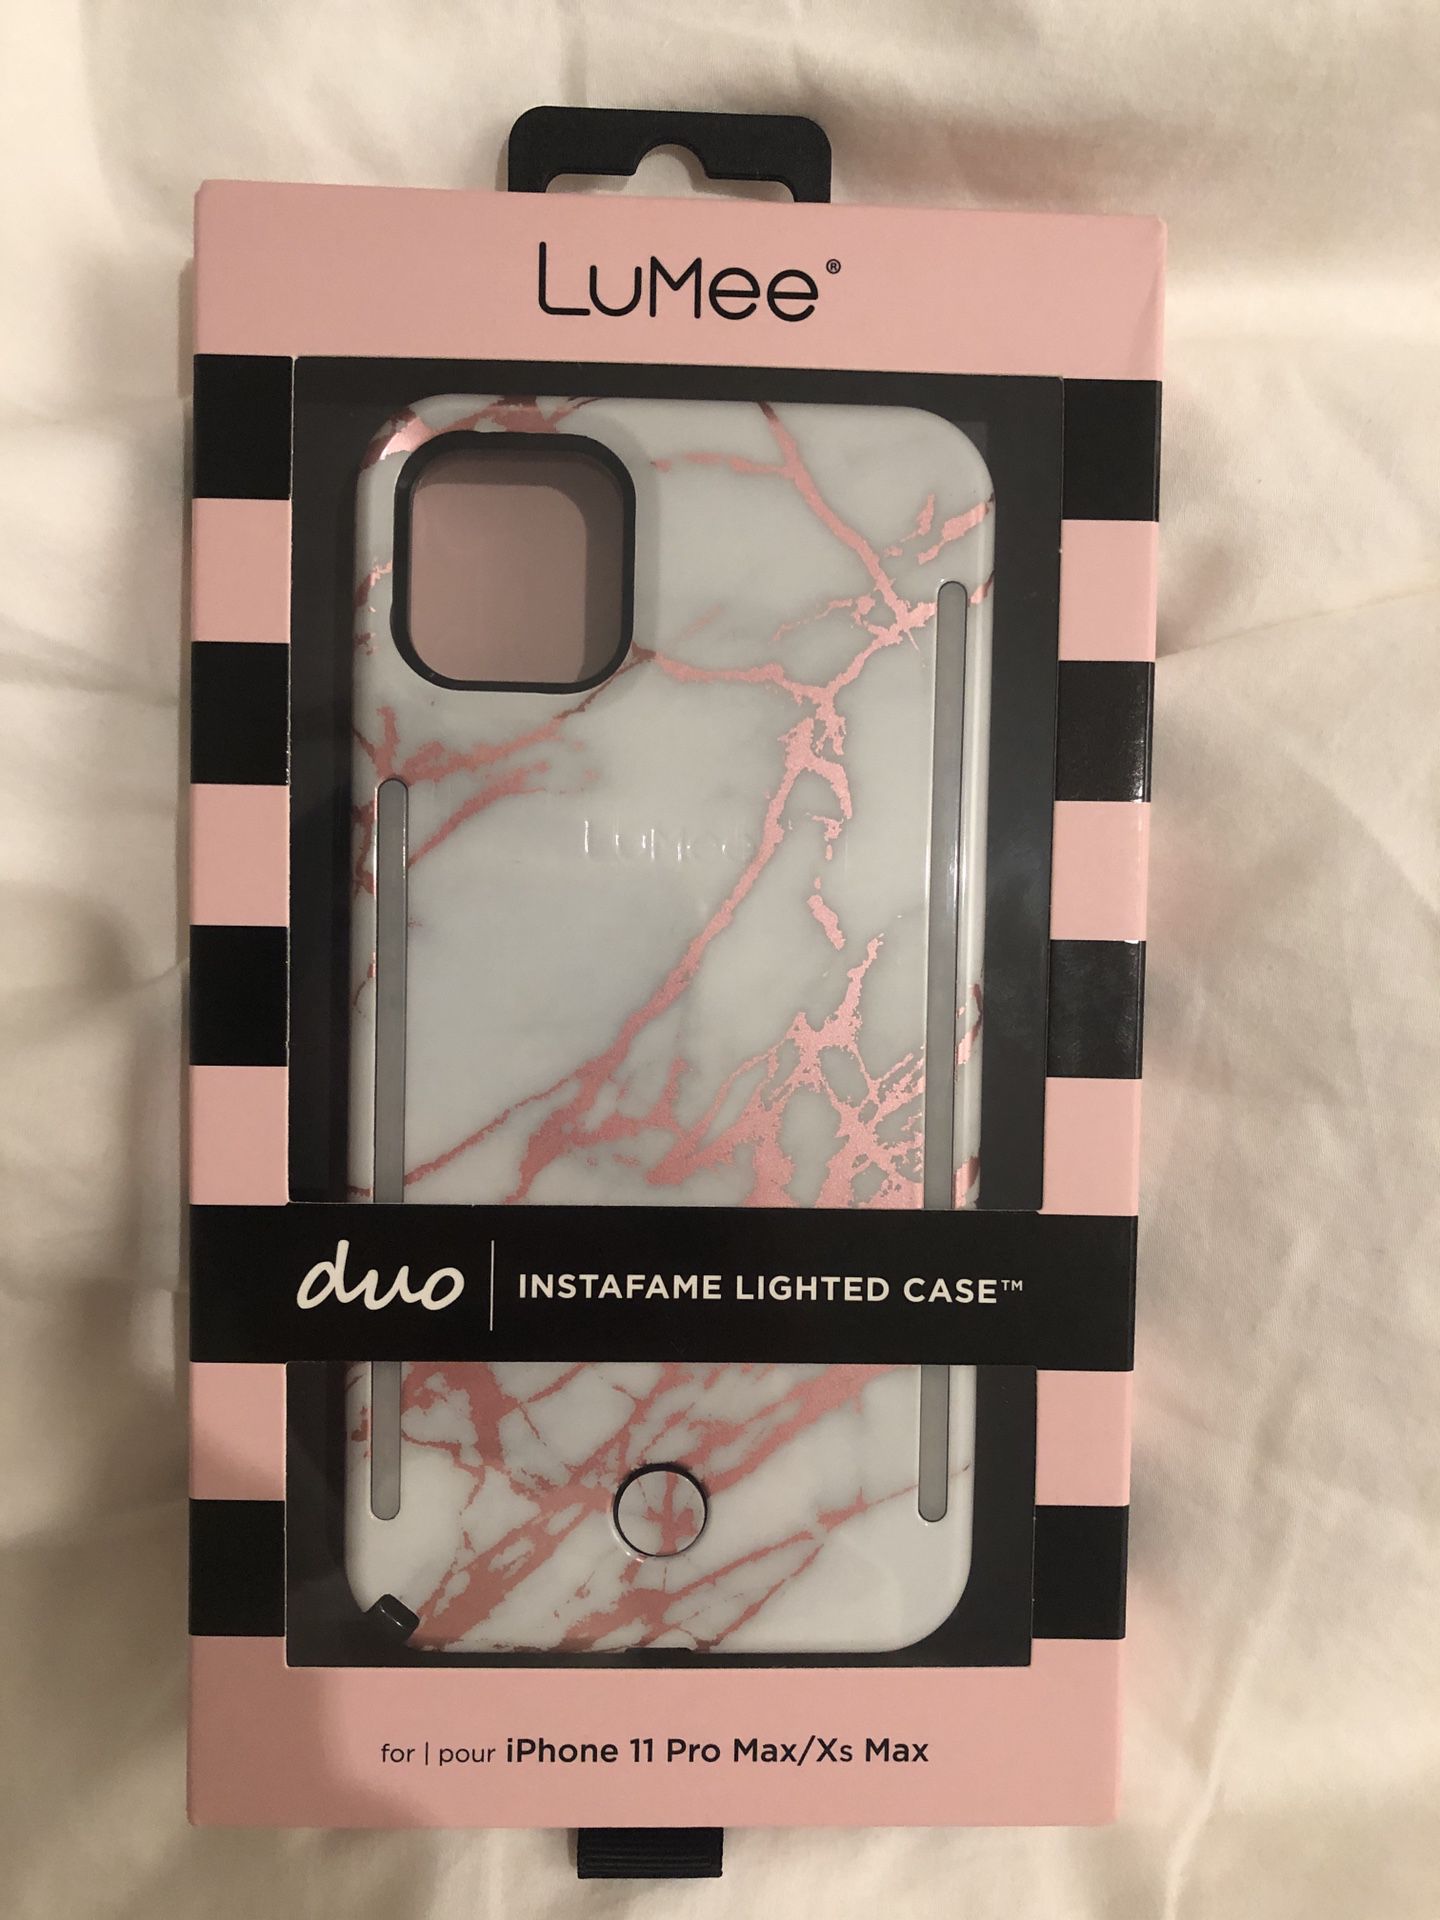 New LuMee iPhone 11 max/XS max case